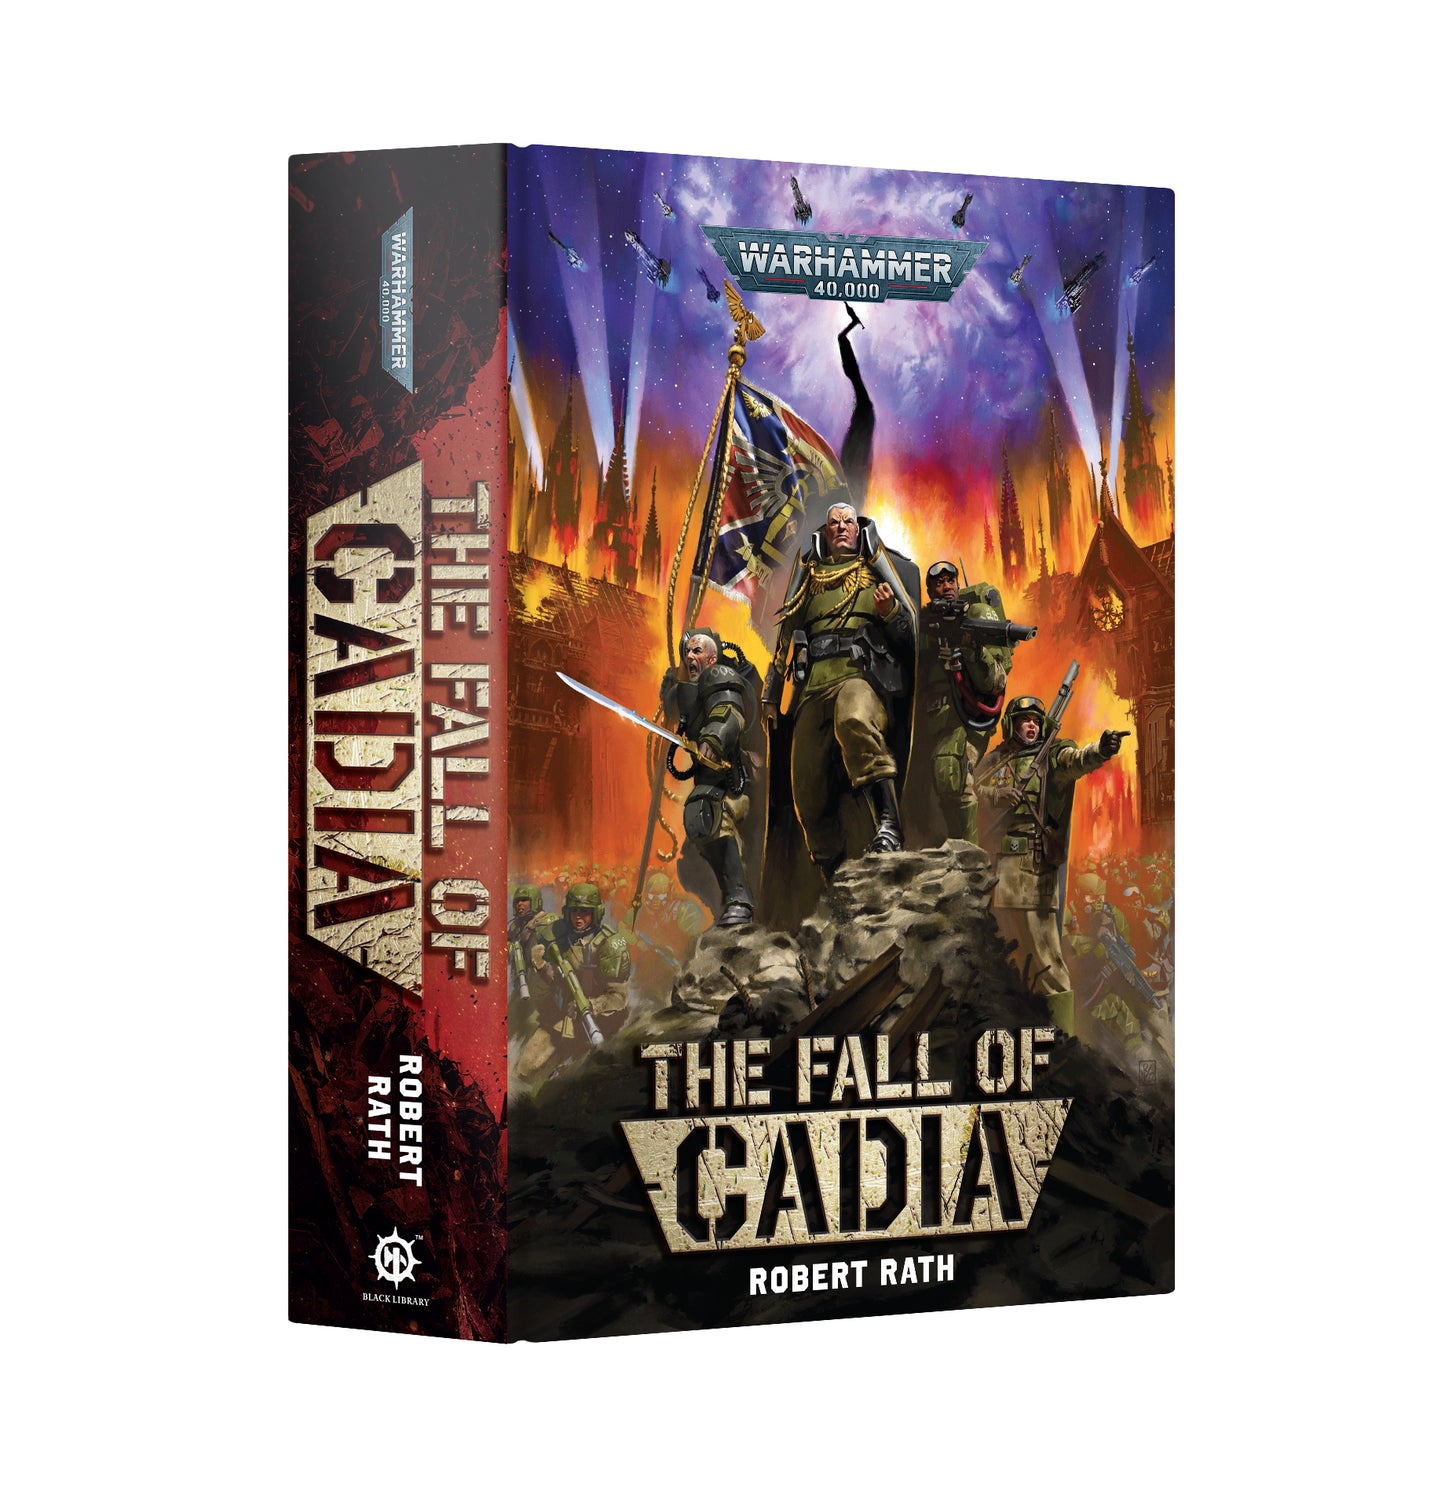 THE FALL OF CADIA (HC)